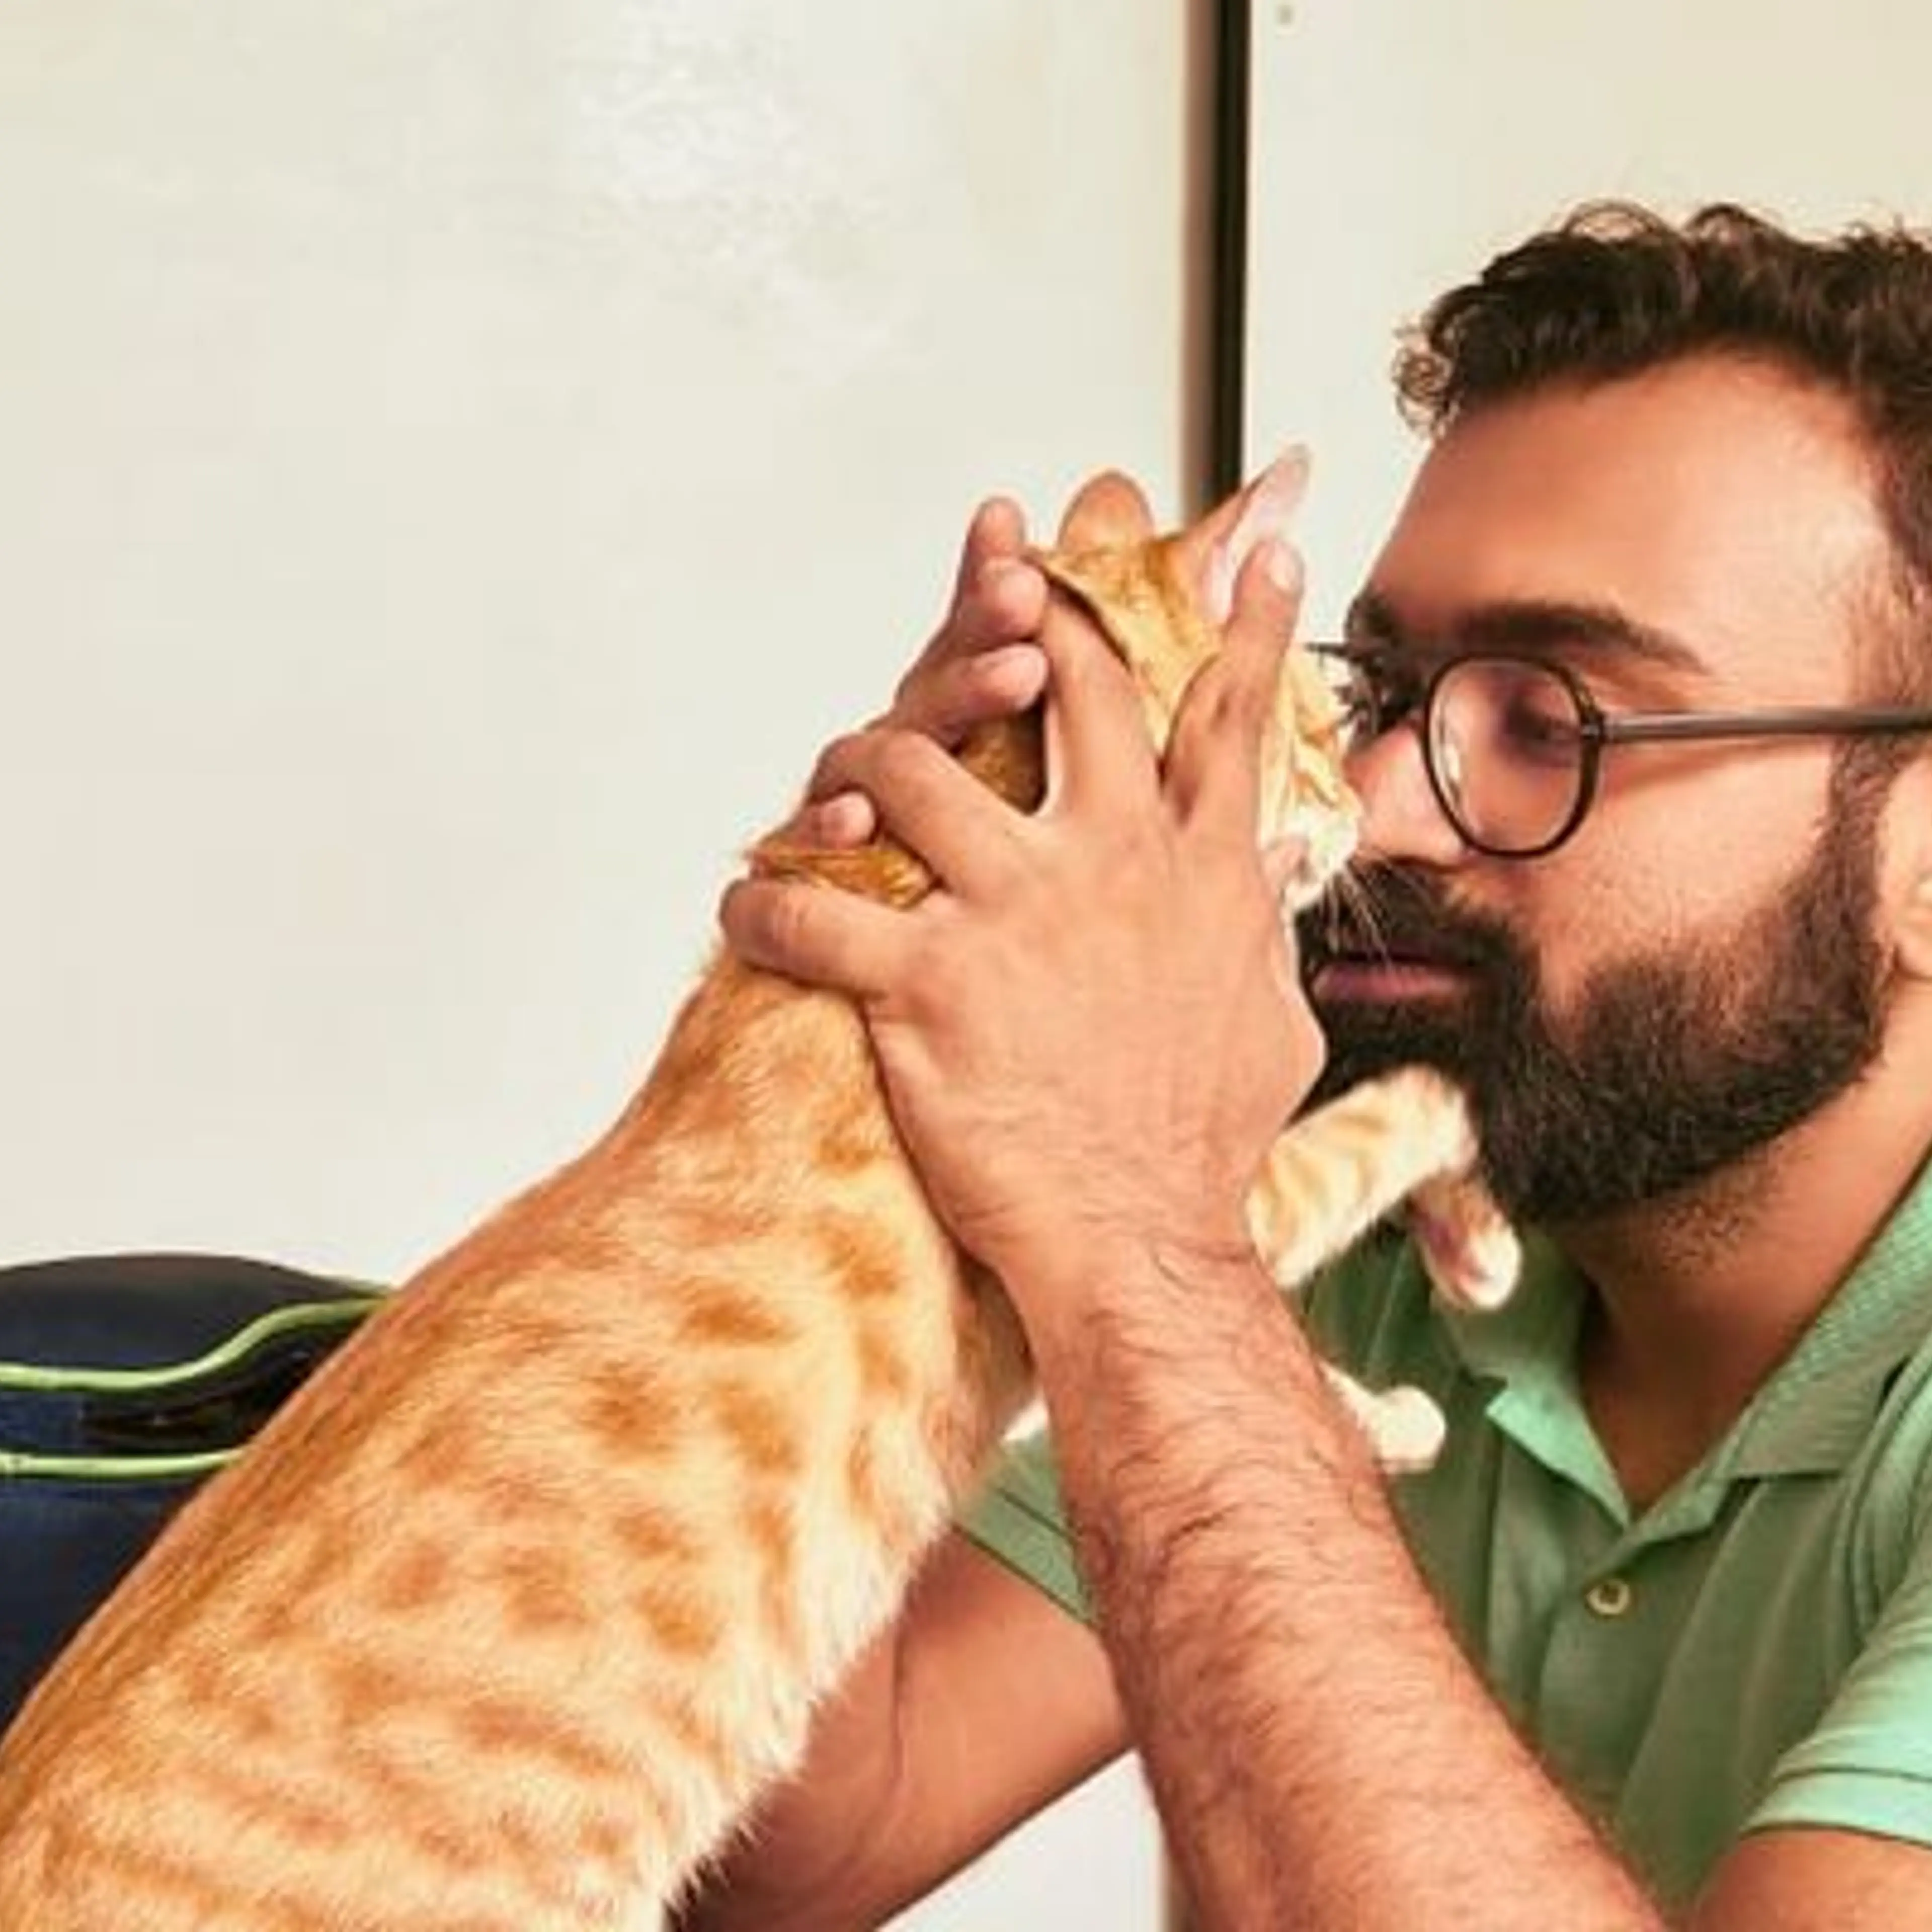 Biggest challenge around pet care in India is mindset: Supetails' Varun Sadana